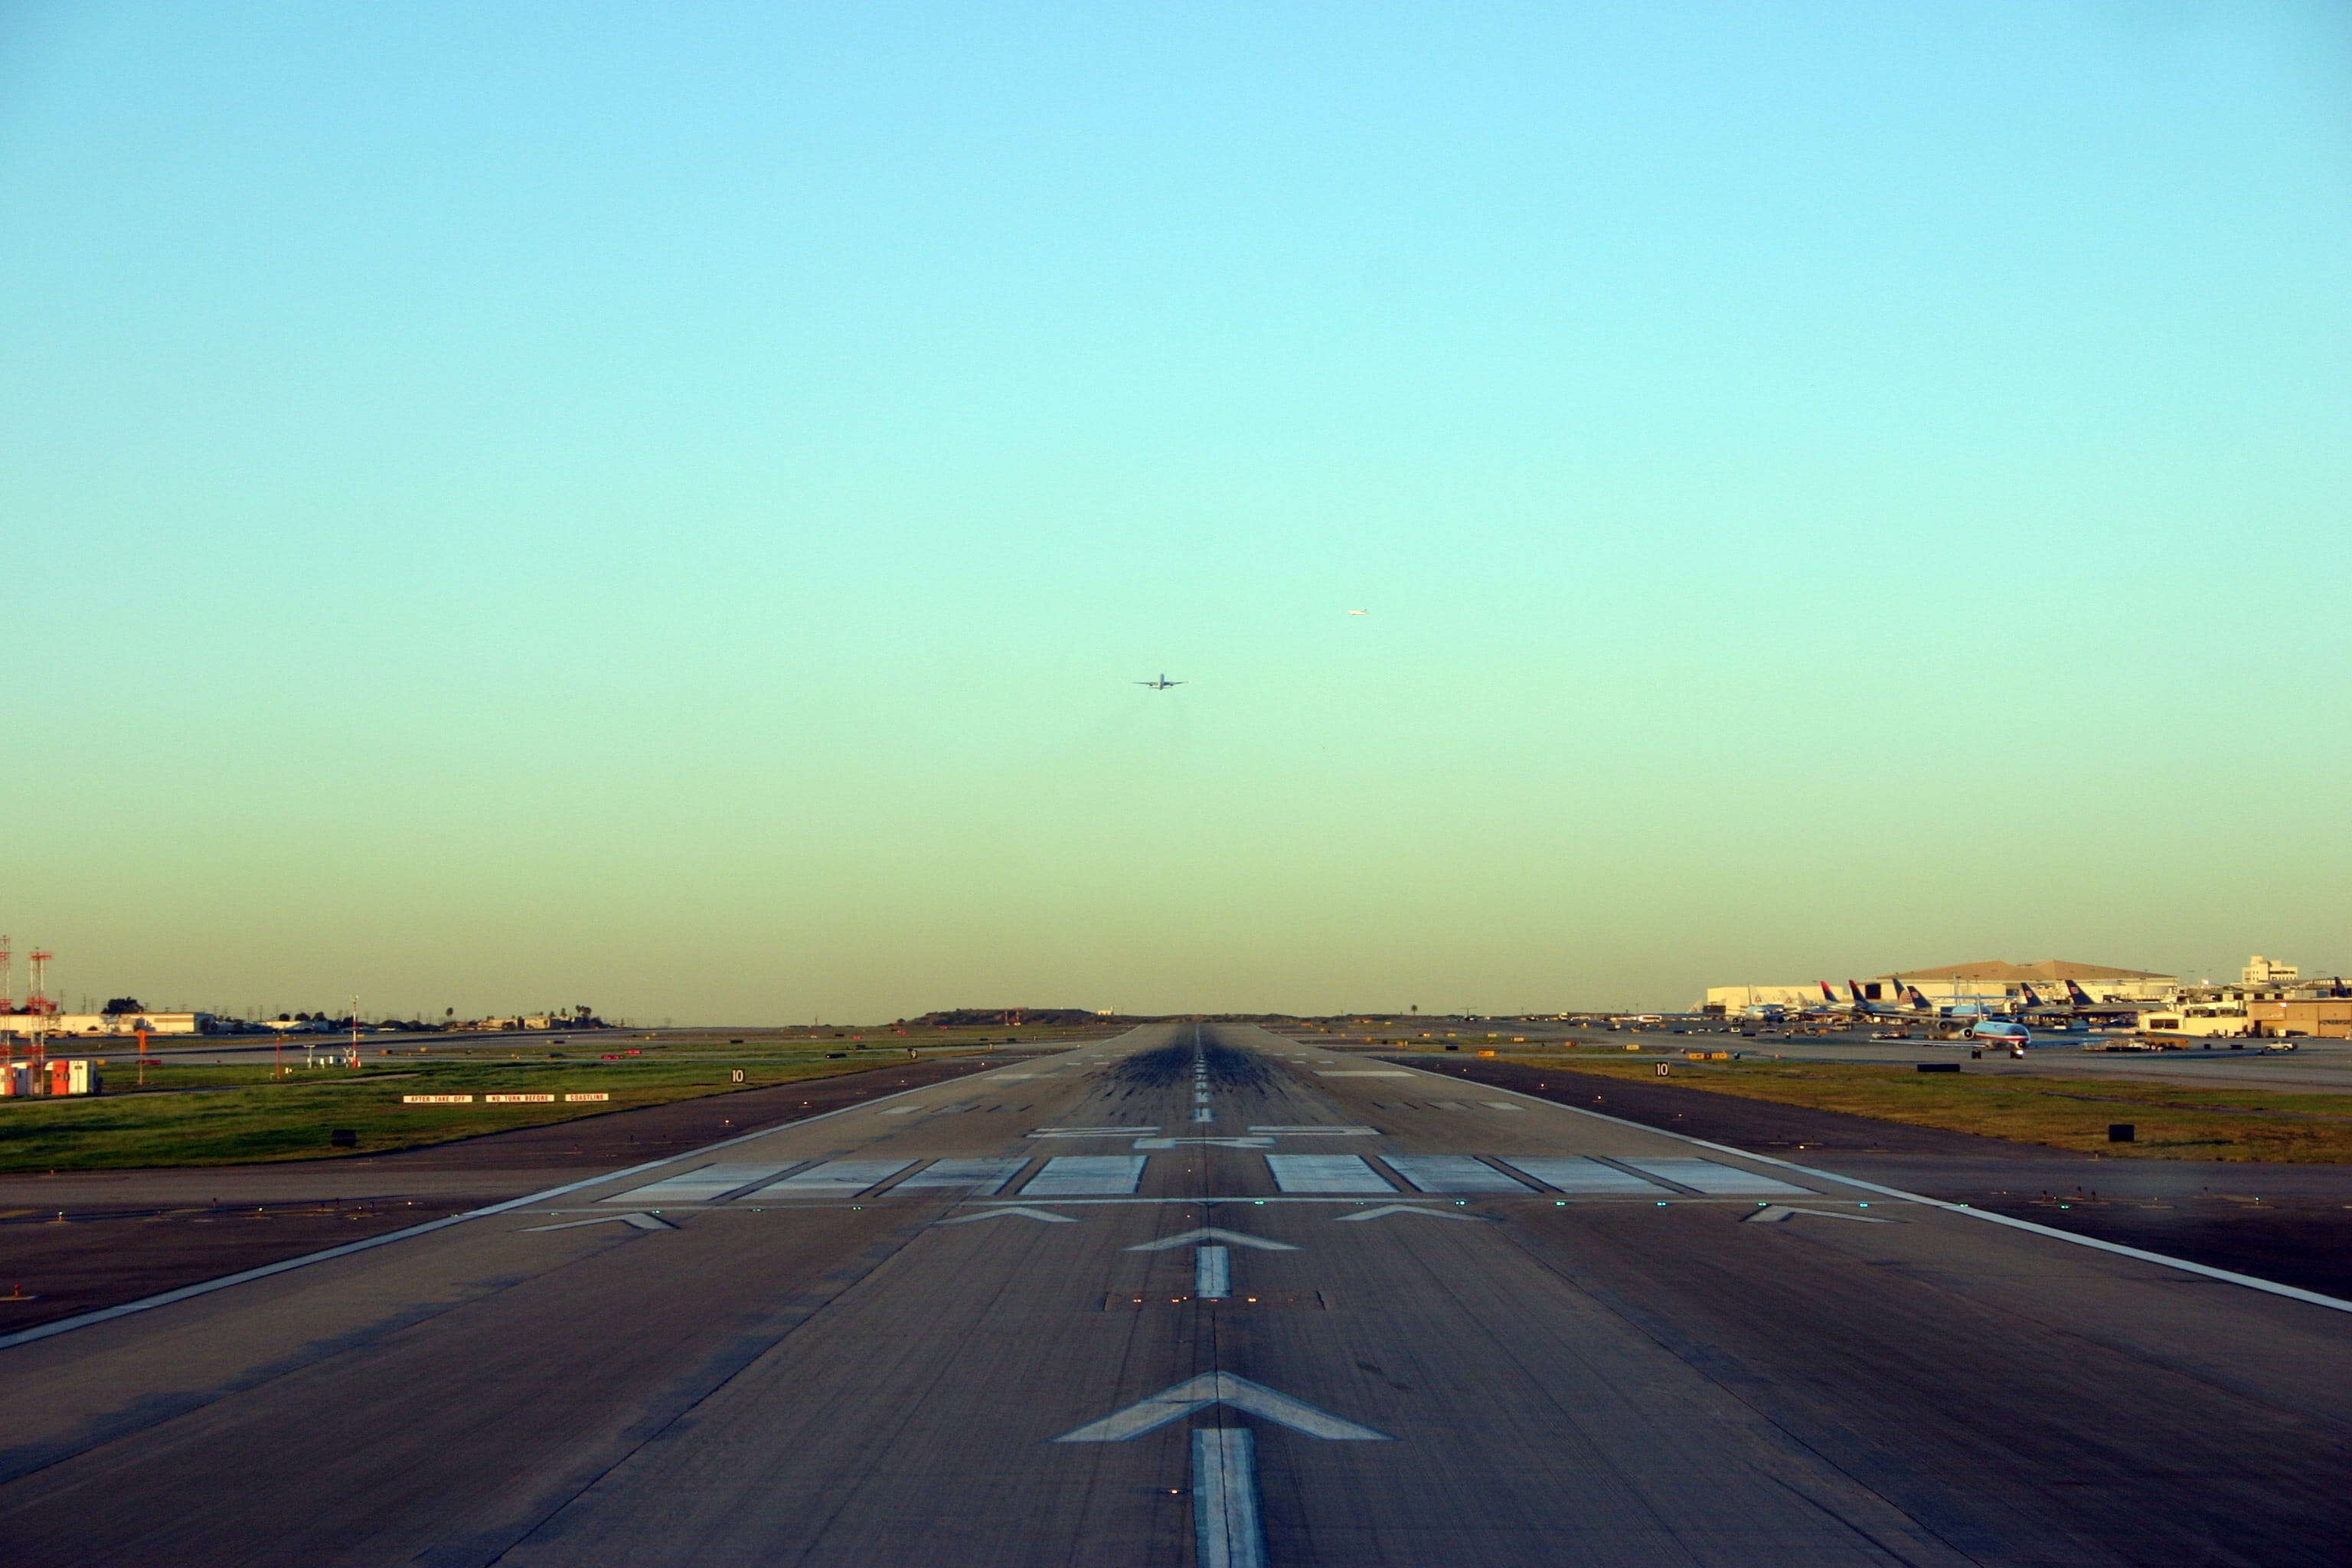 photography of airport, Runway, Travel, airport runway, airplane